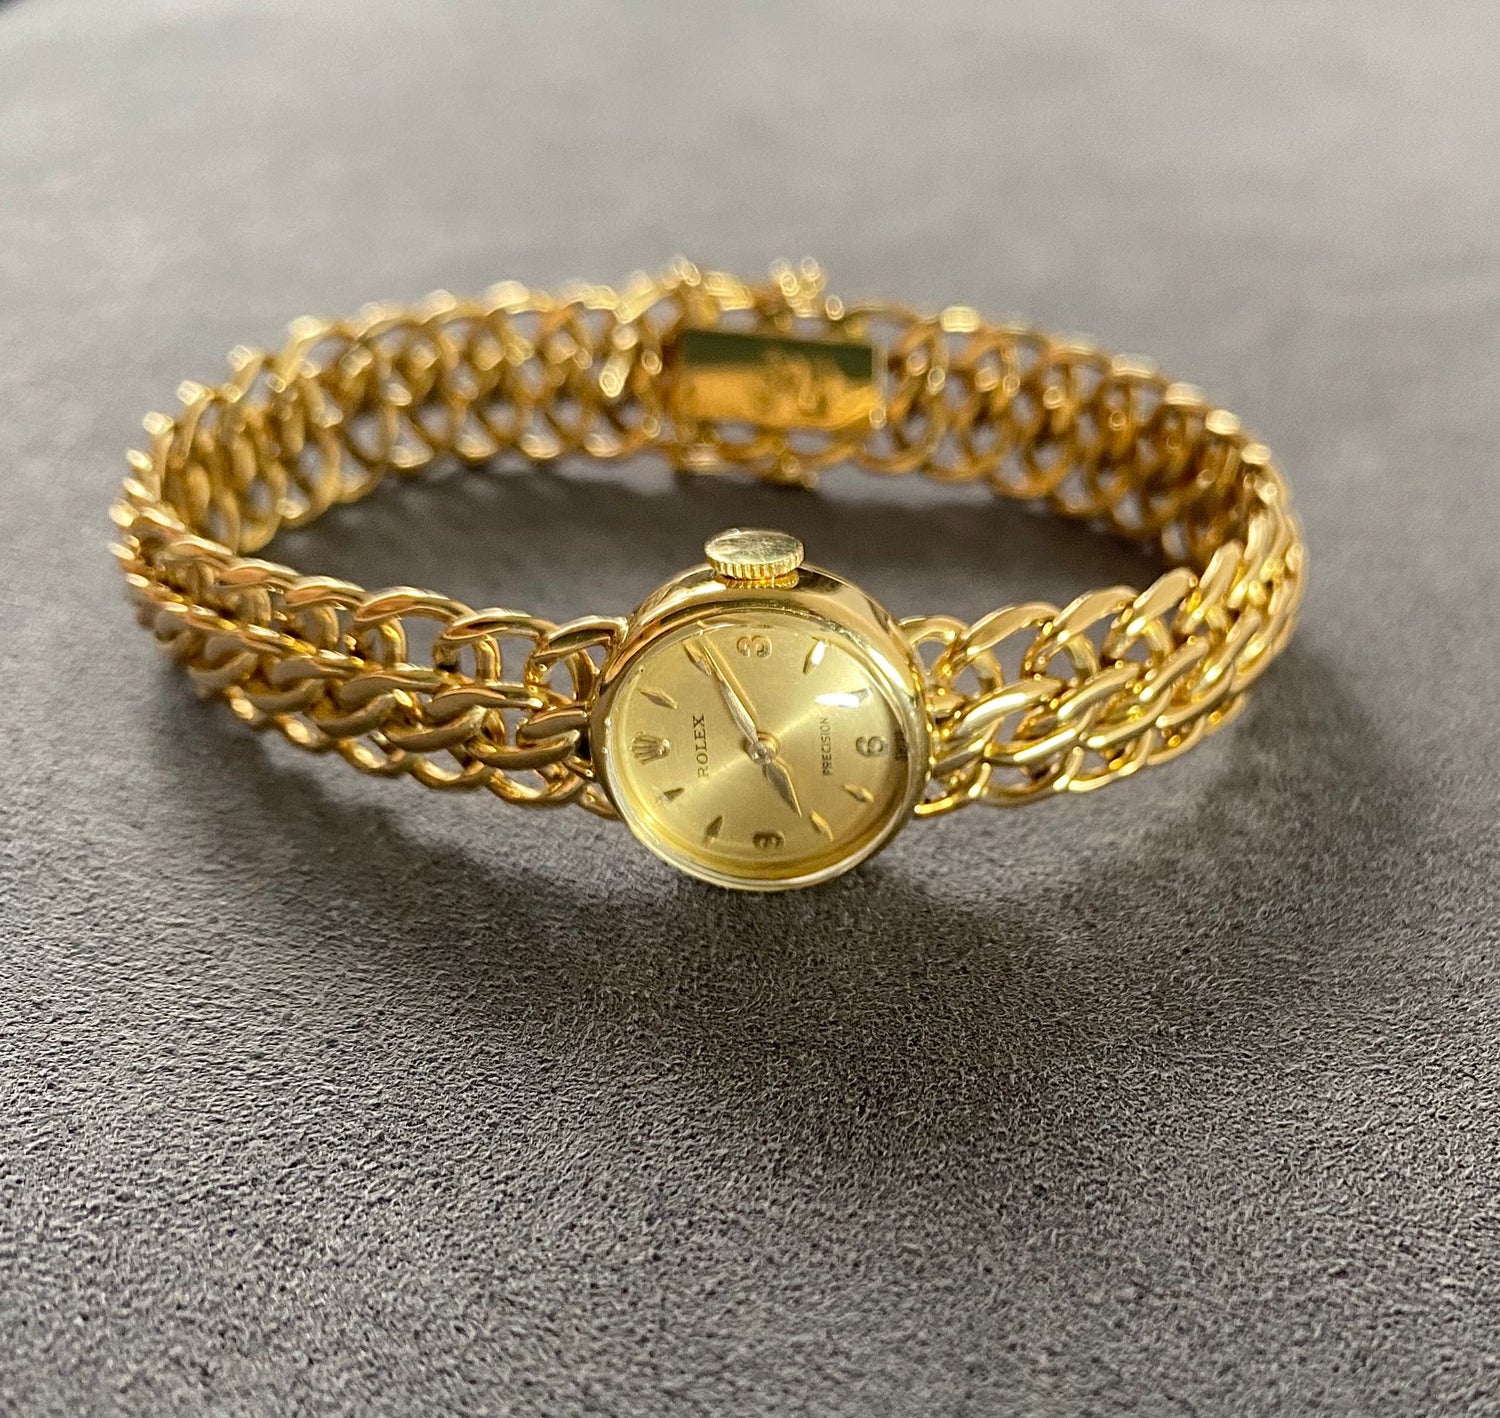 Rolex Precision Vintage Gold Watch - PM Vintage Watches - Rolex